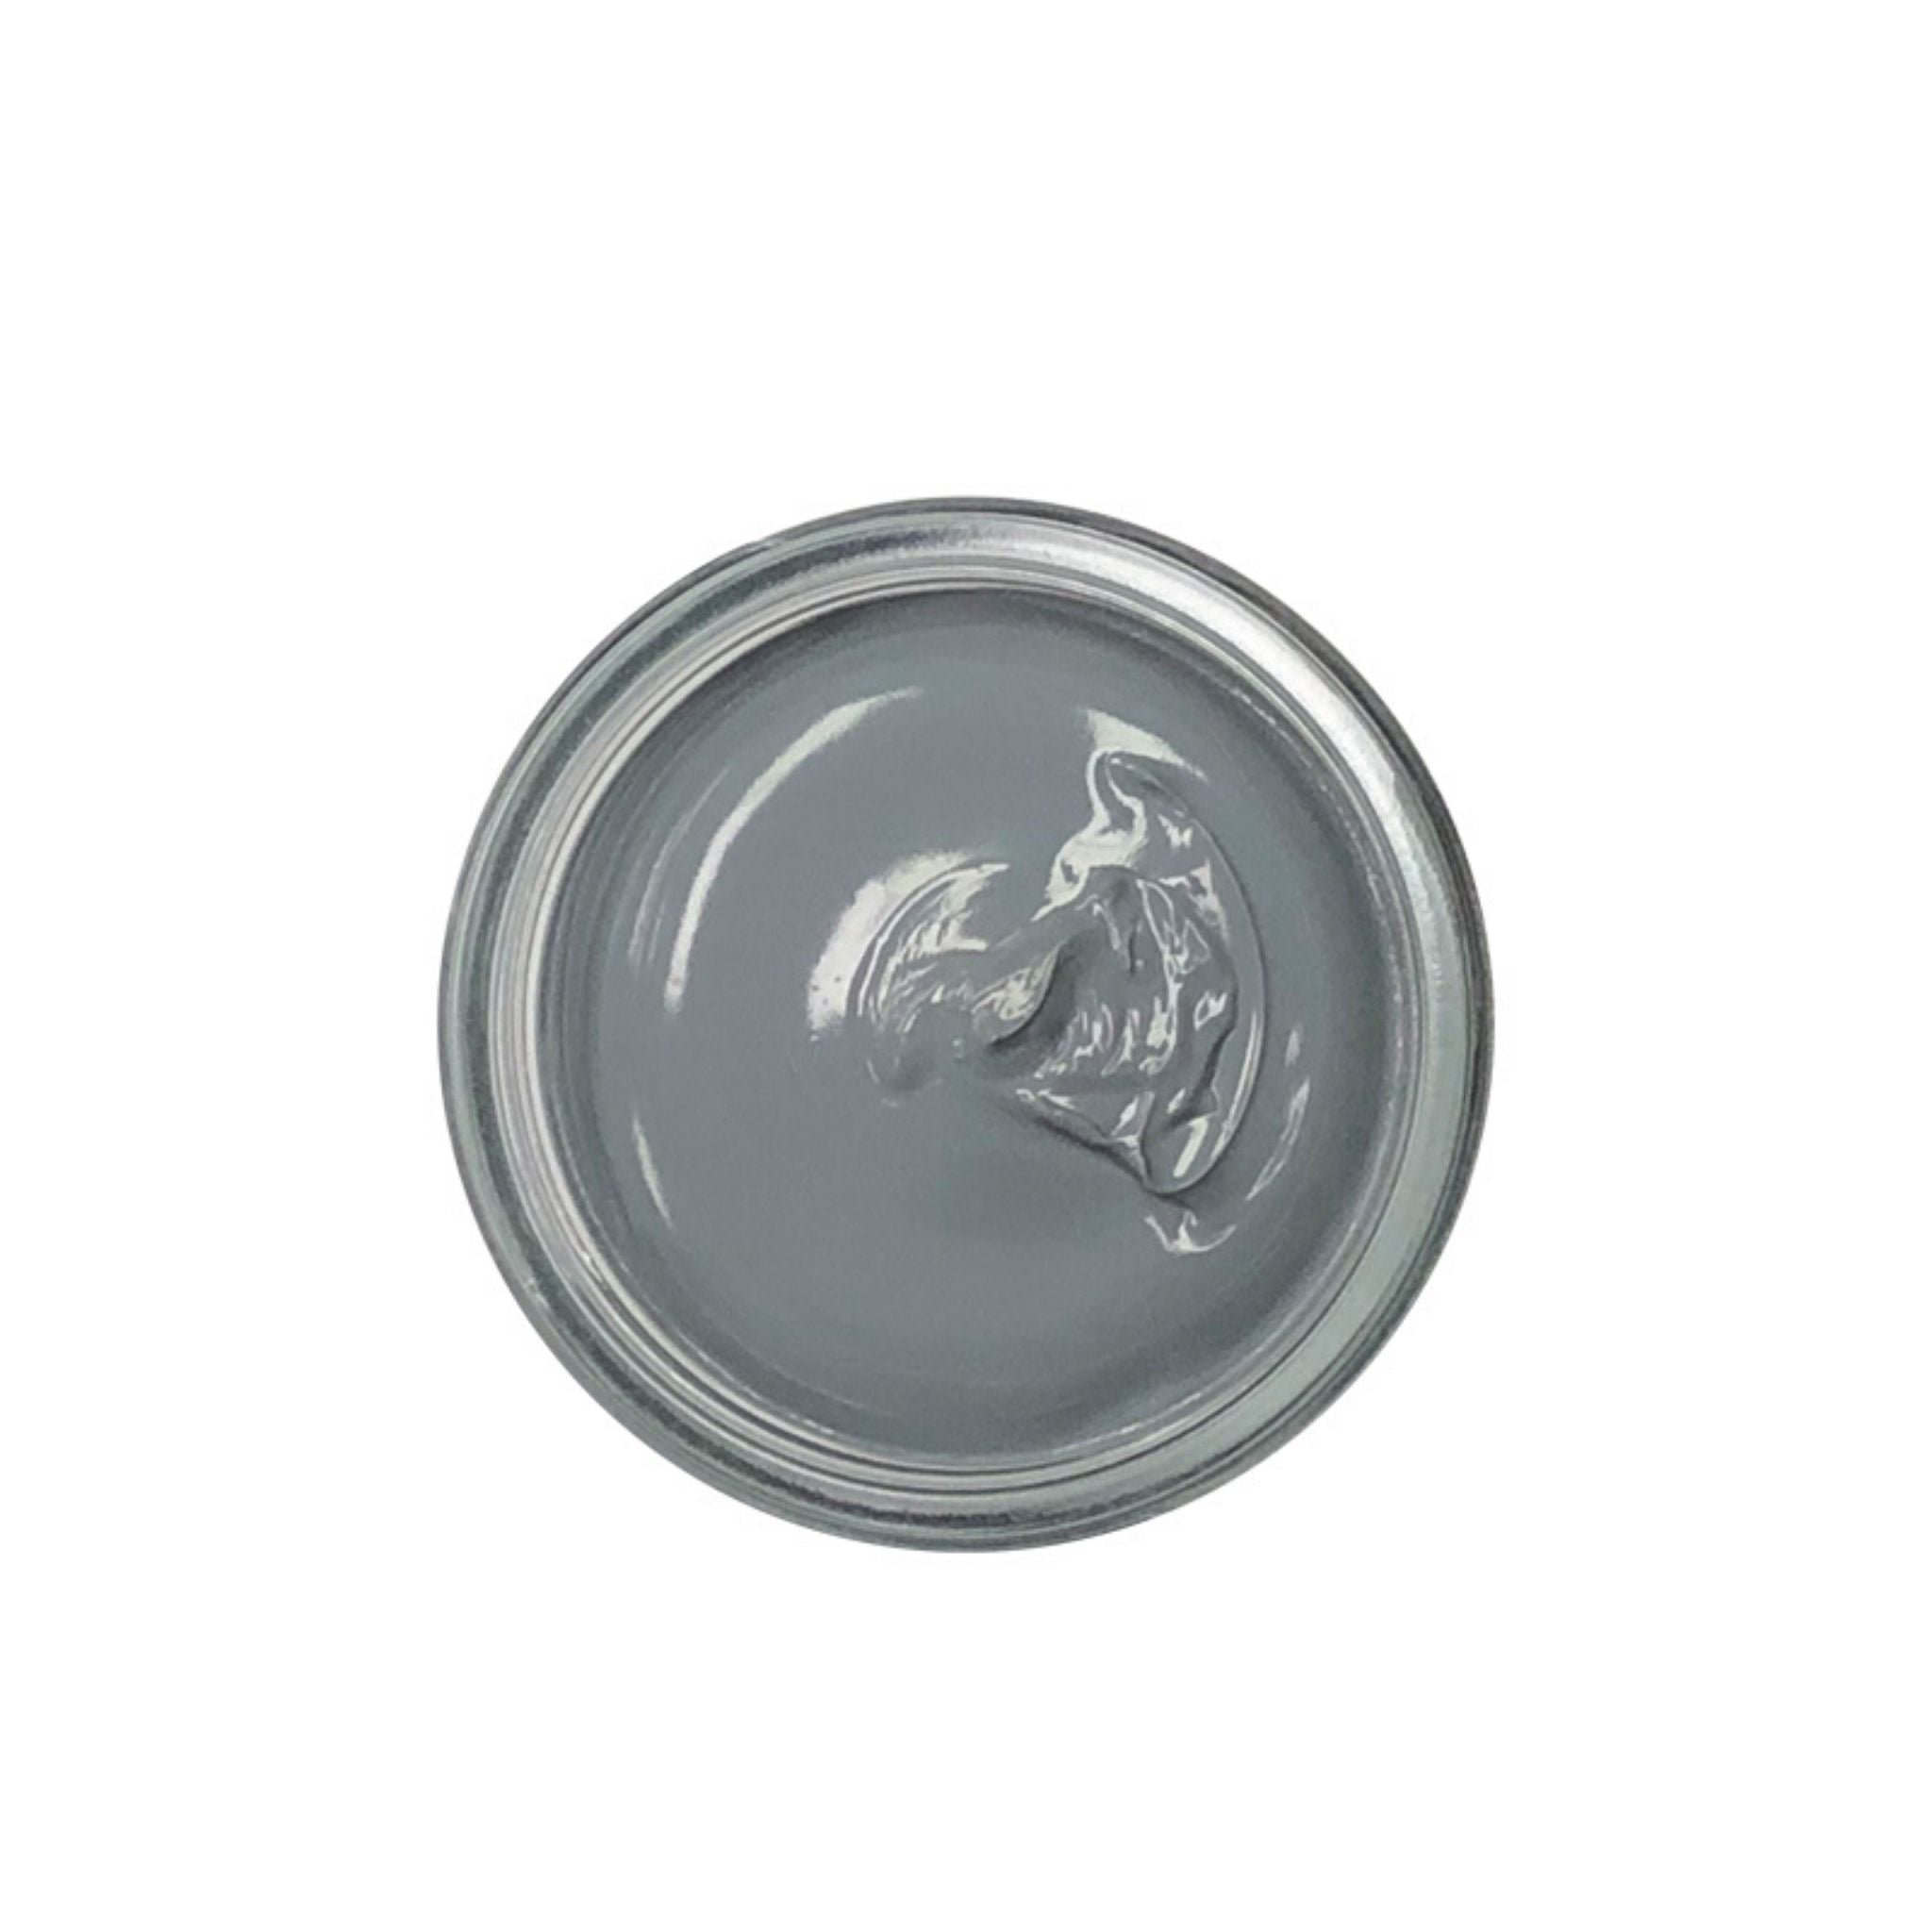 Grey shoe cream polish in clear jar